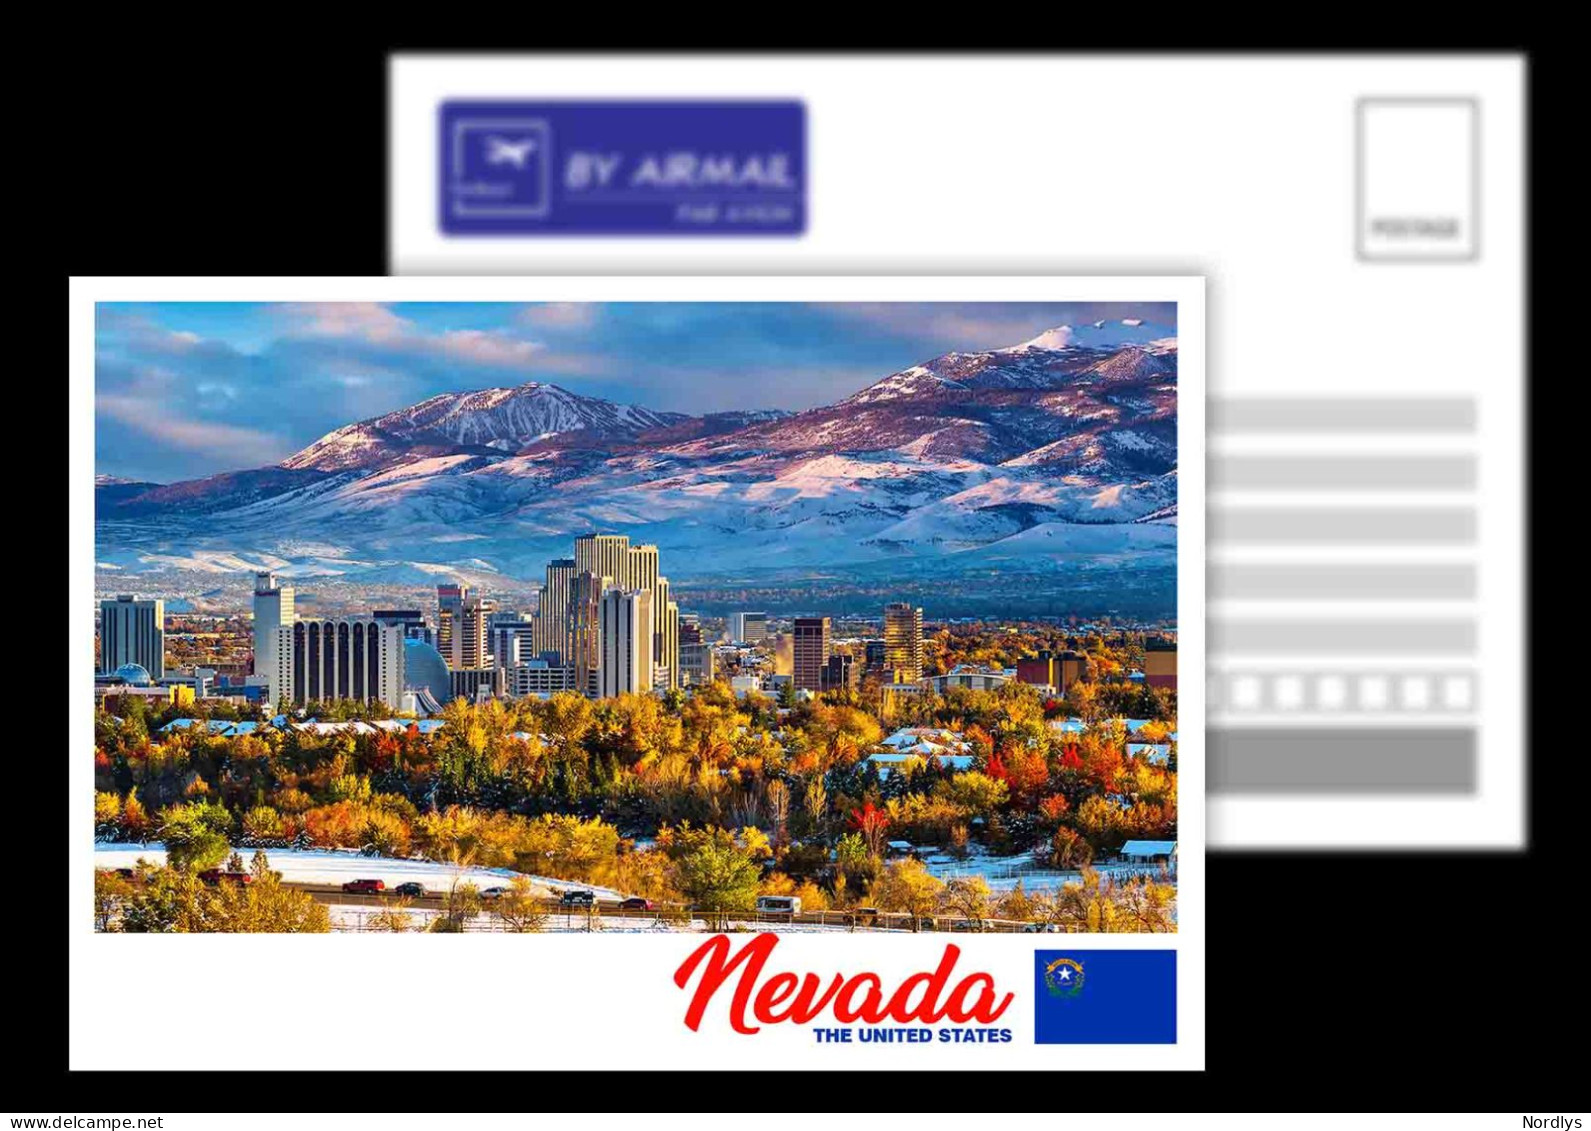 Nevada / US States / View Card - Reno